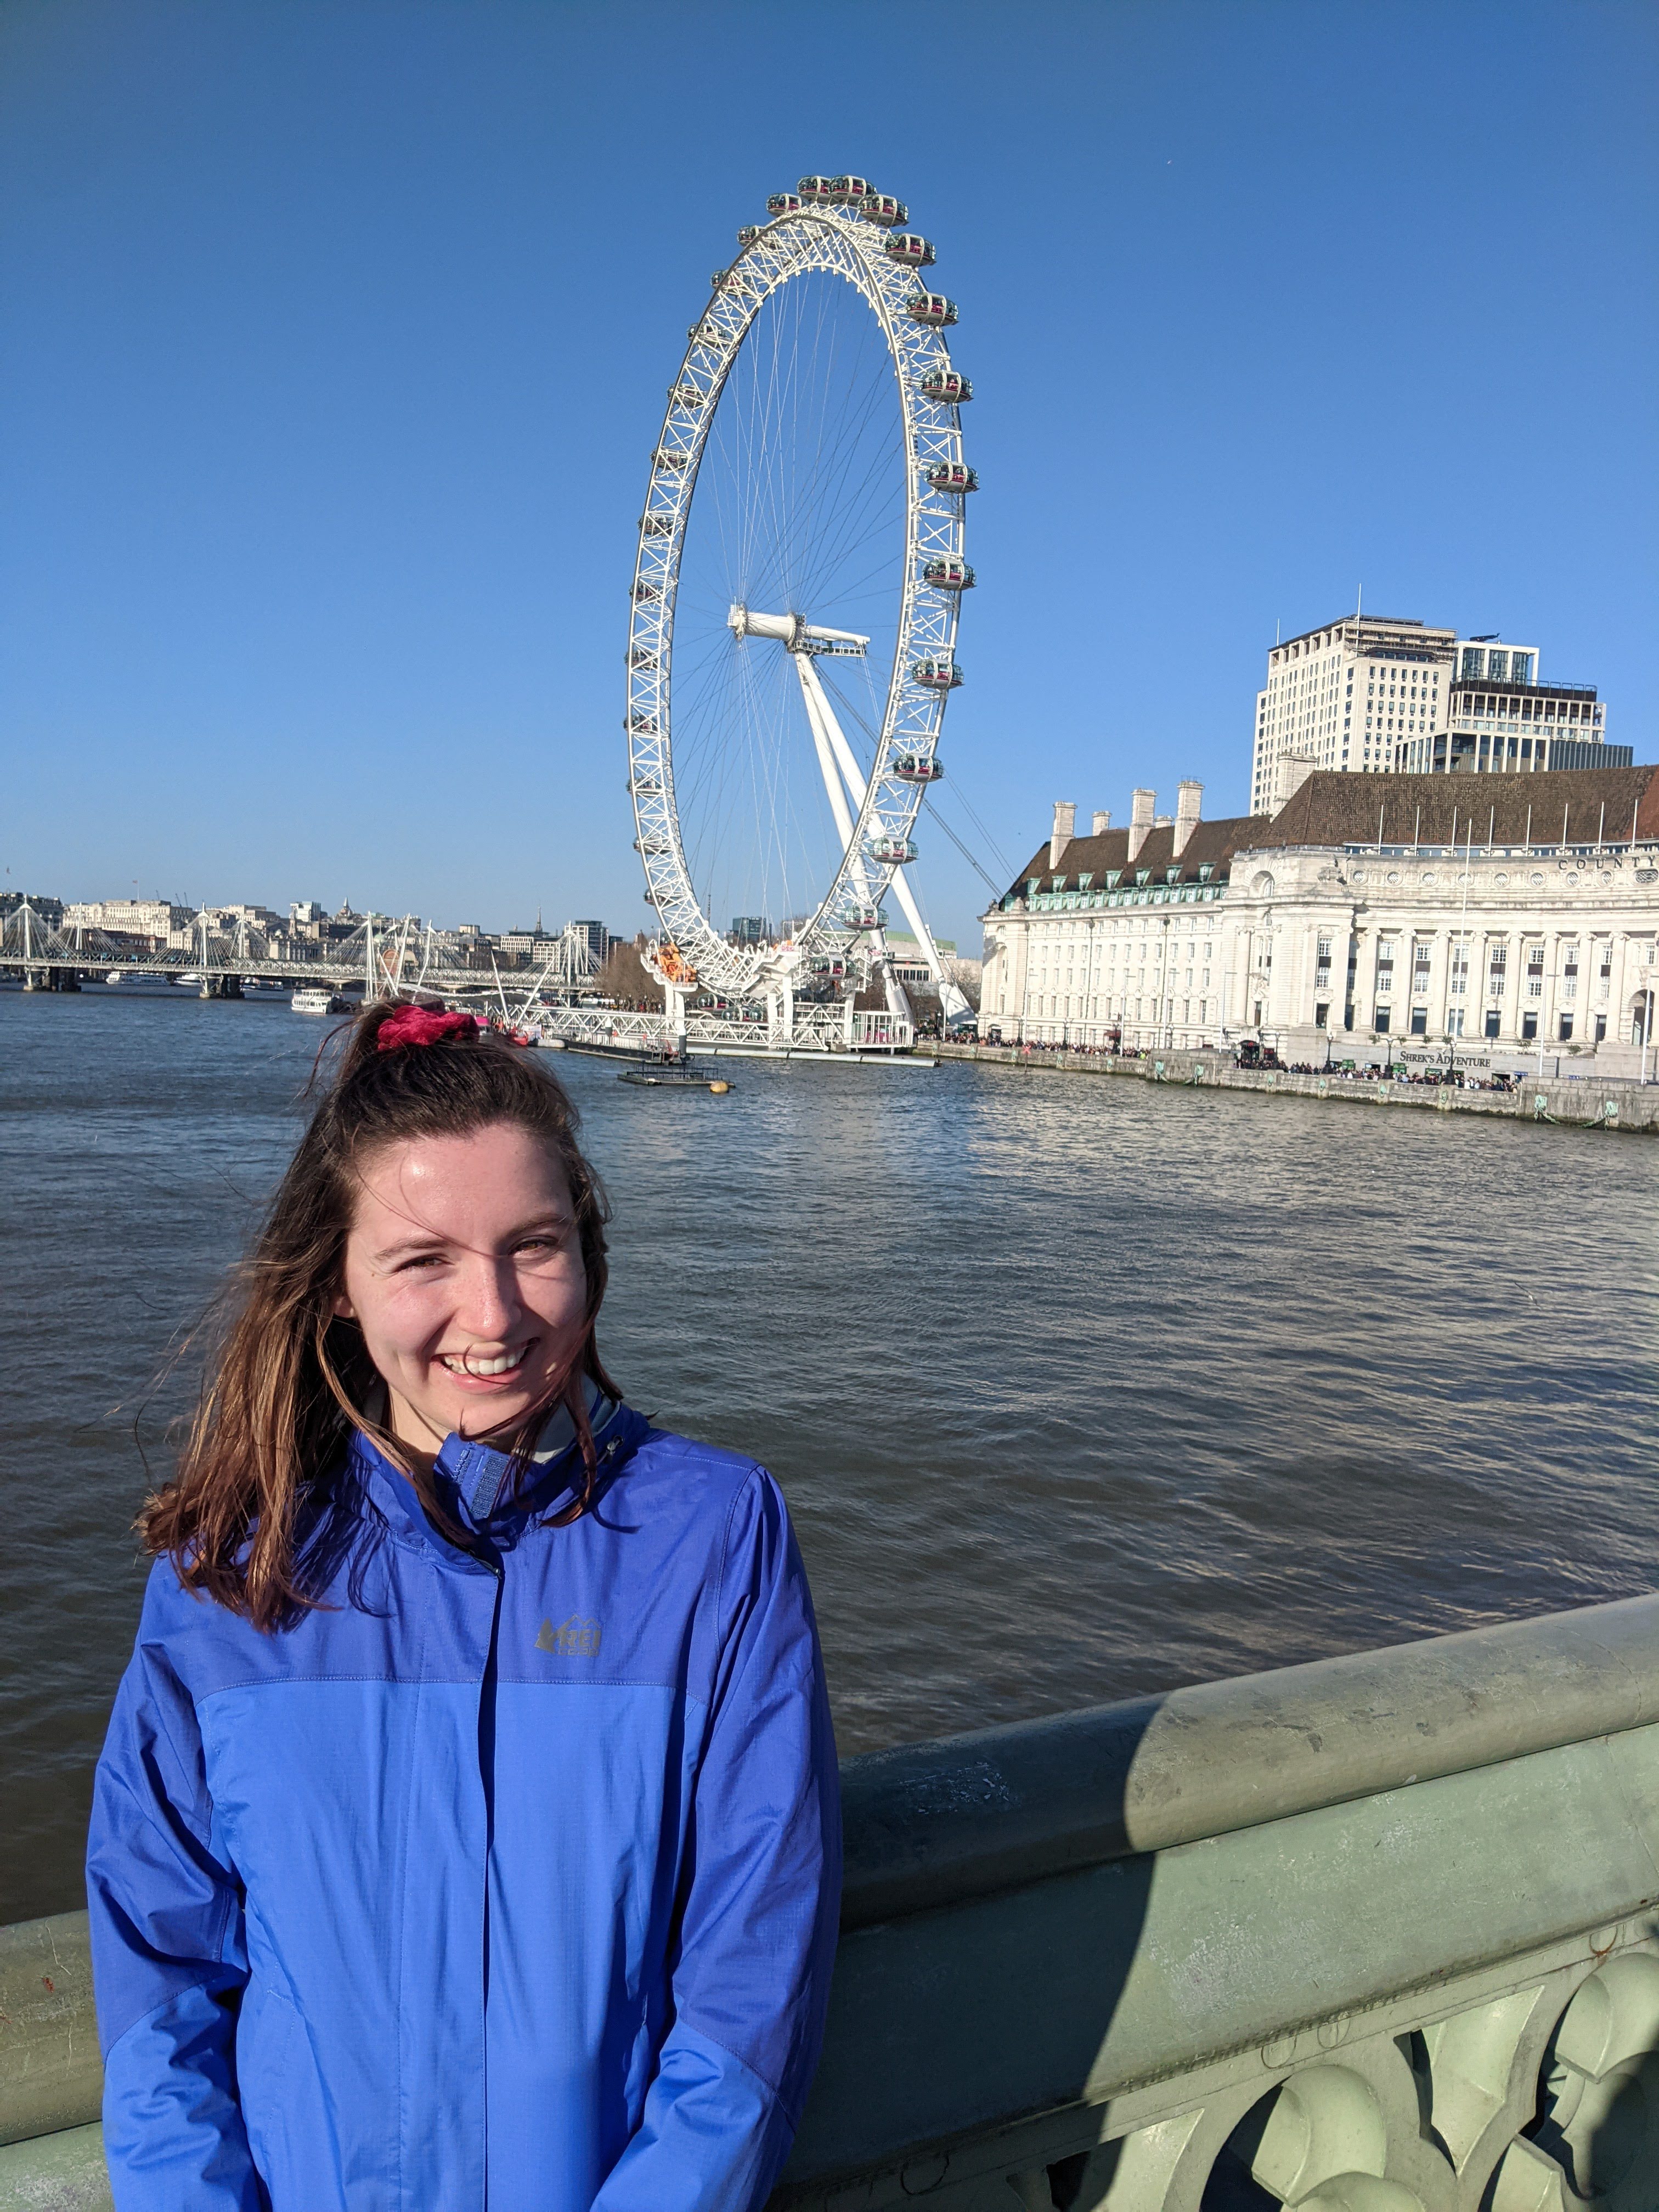 london-eye-ferris-wheel-tourist-london-travel-guide